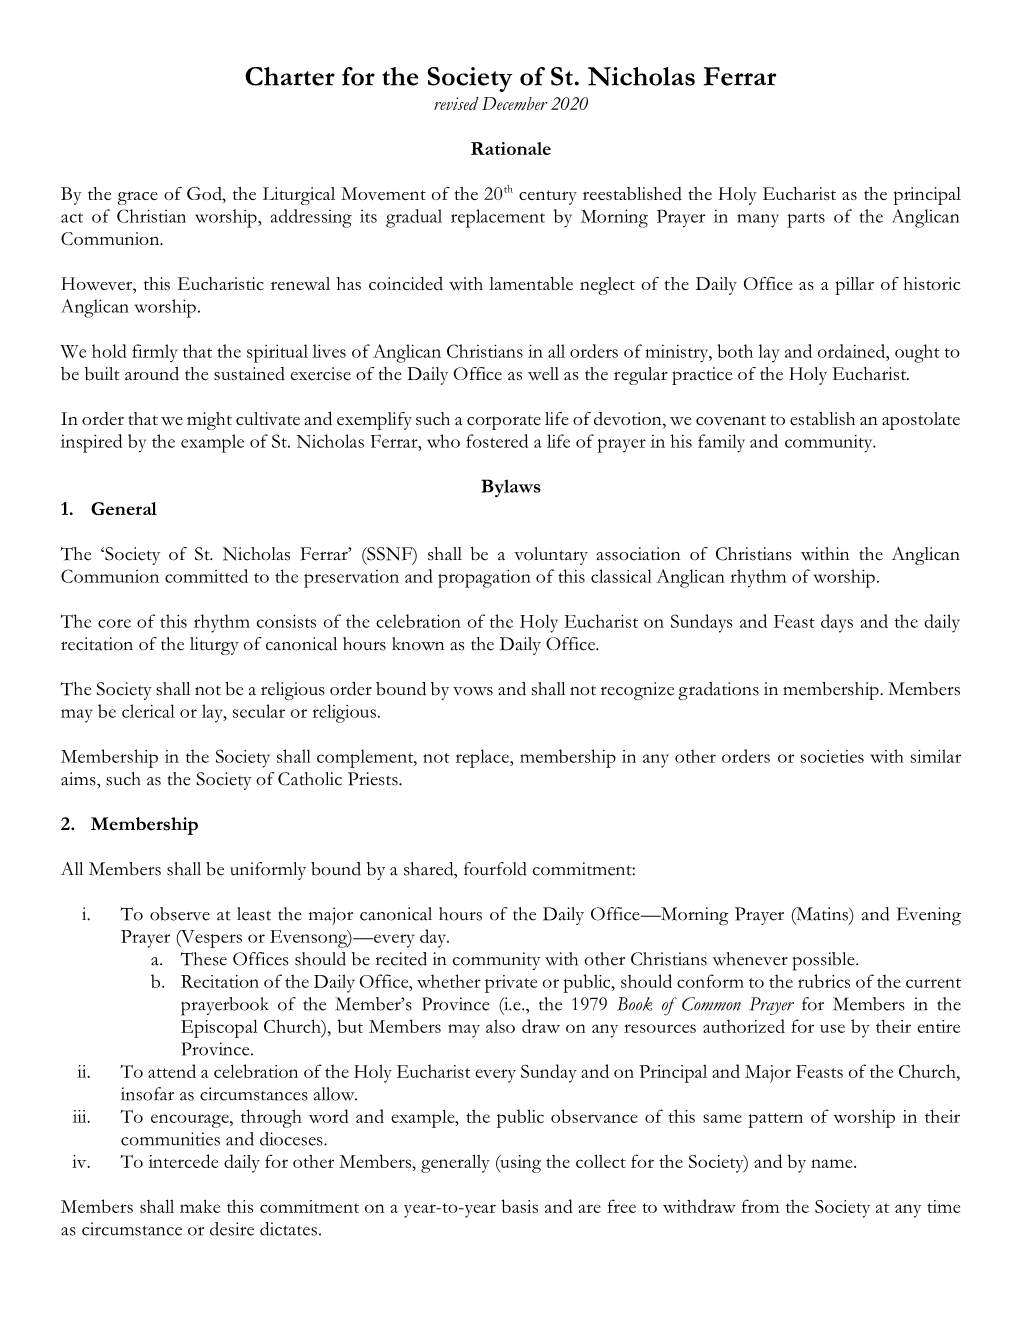 Charter for the Society of St. Nicholas Ferrar Revised December 2020